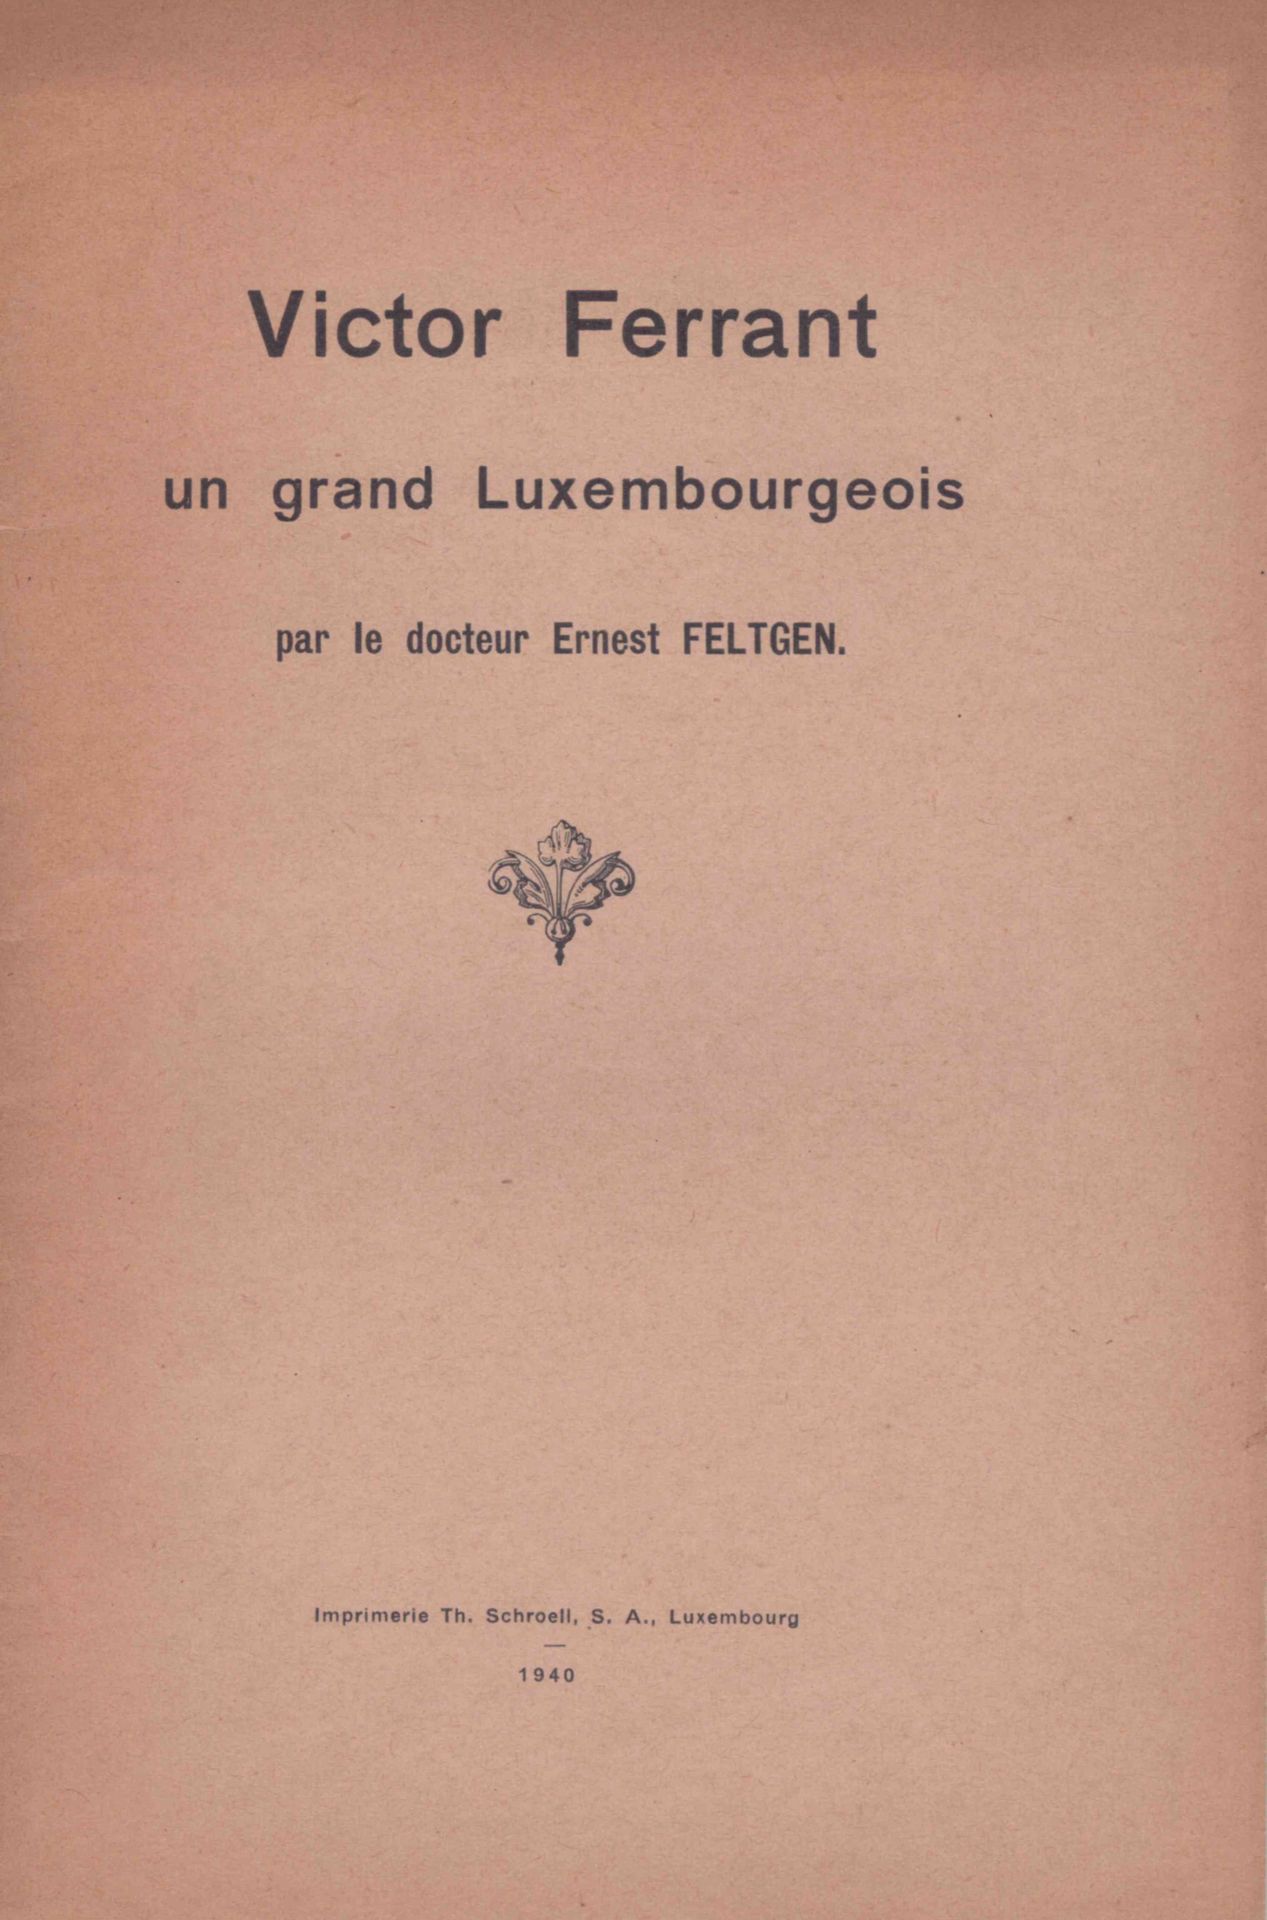 Null (纪念）欧内斯特-费尔特根博士：《维克多-费兰特，一个伟大的卢森堡人》，Th. Schroell出版社，卢森堡，1940年，从《卢森堡报》转载。